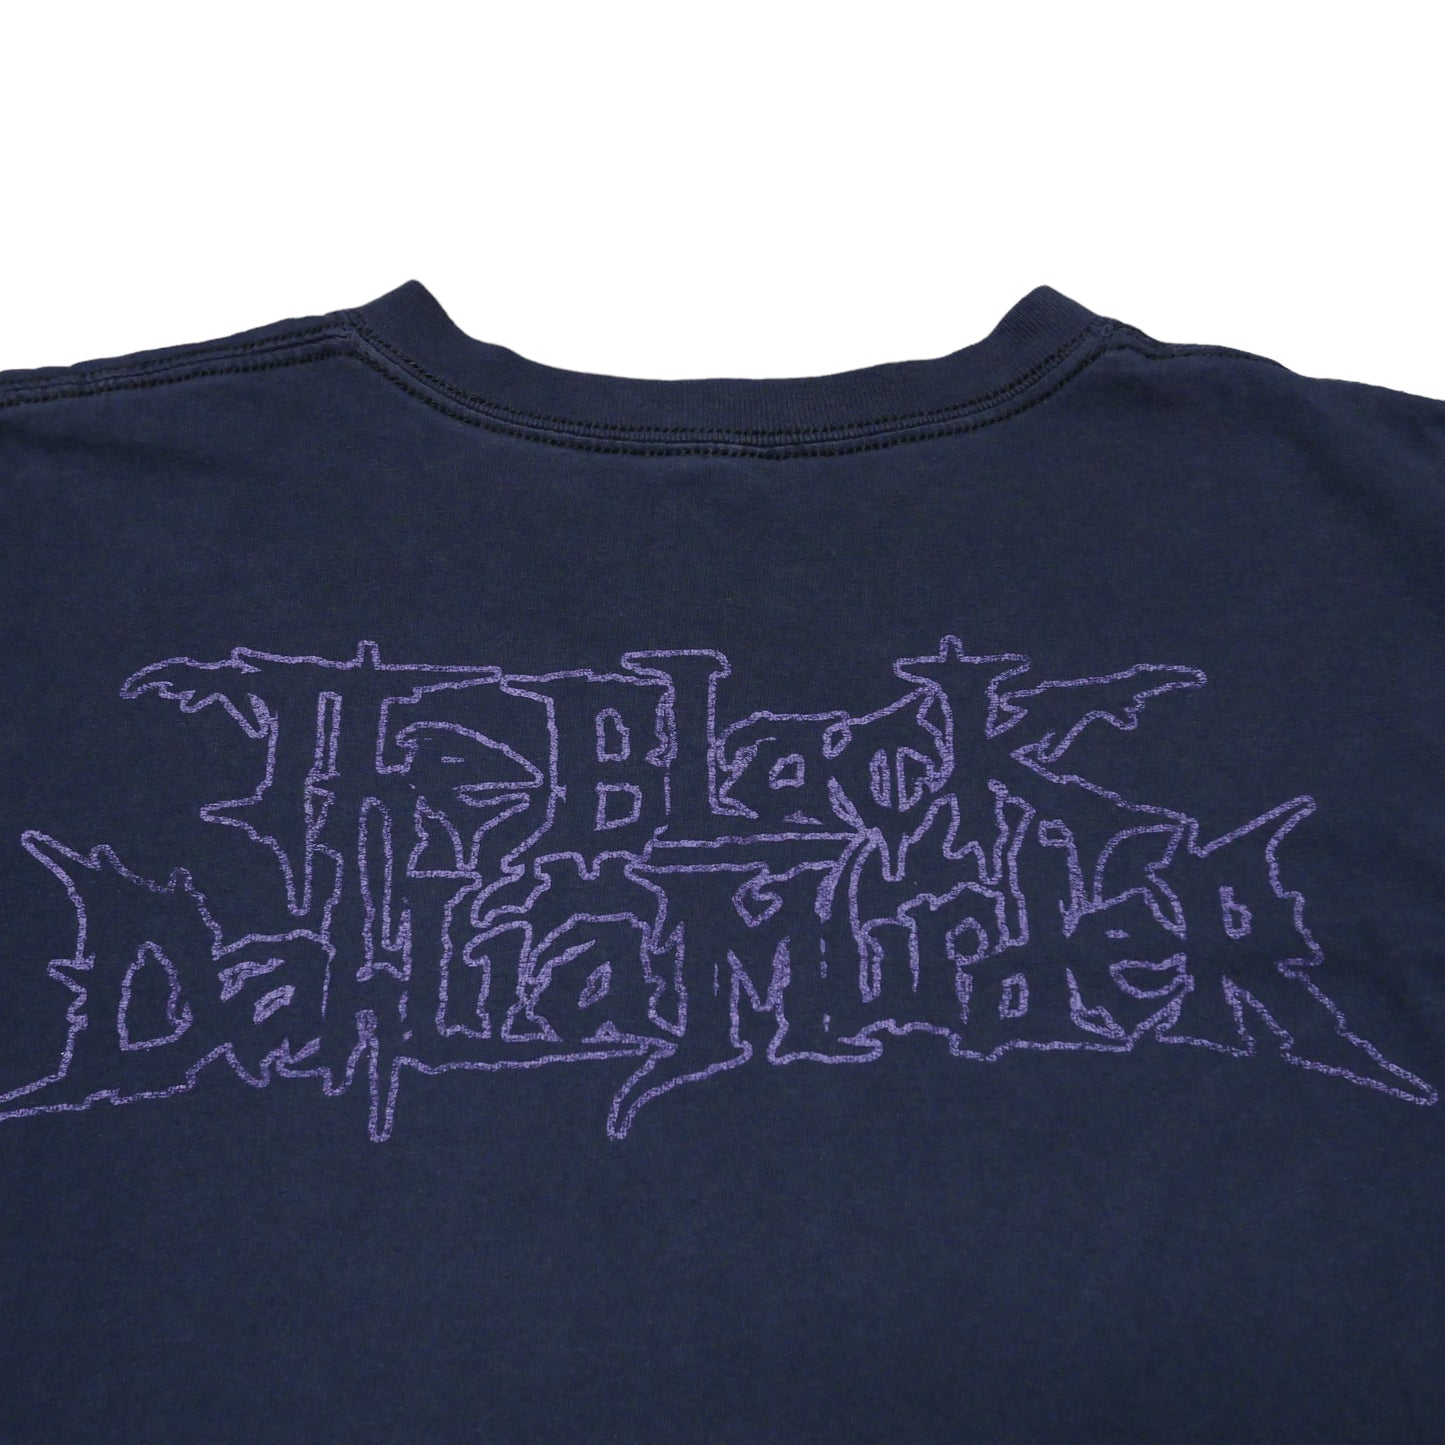 The Black Dahlia Murder Band Shirt - Small